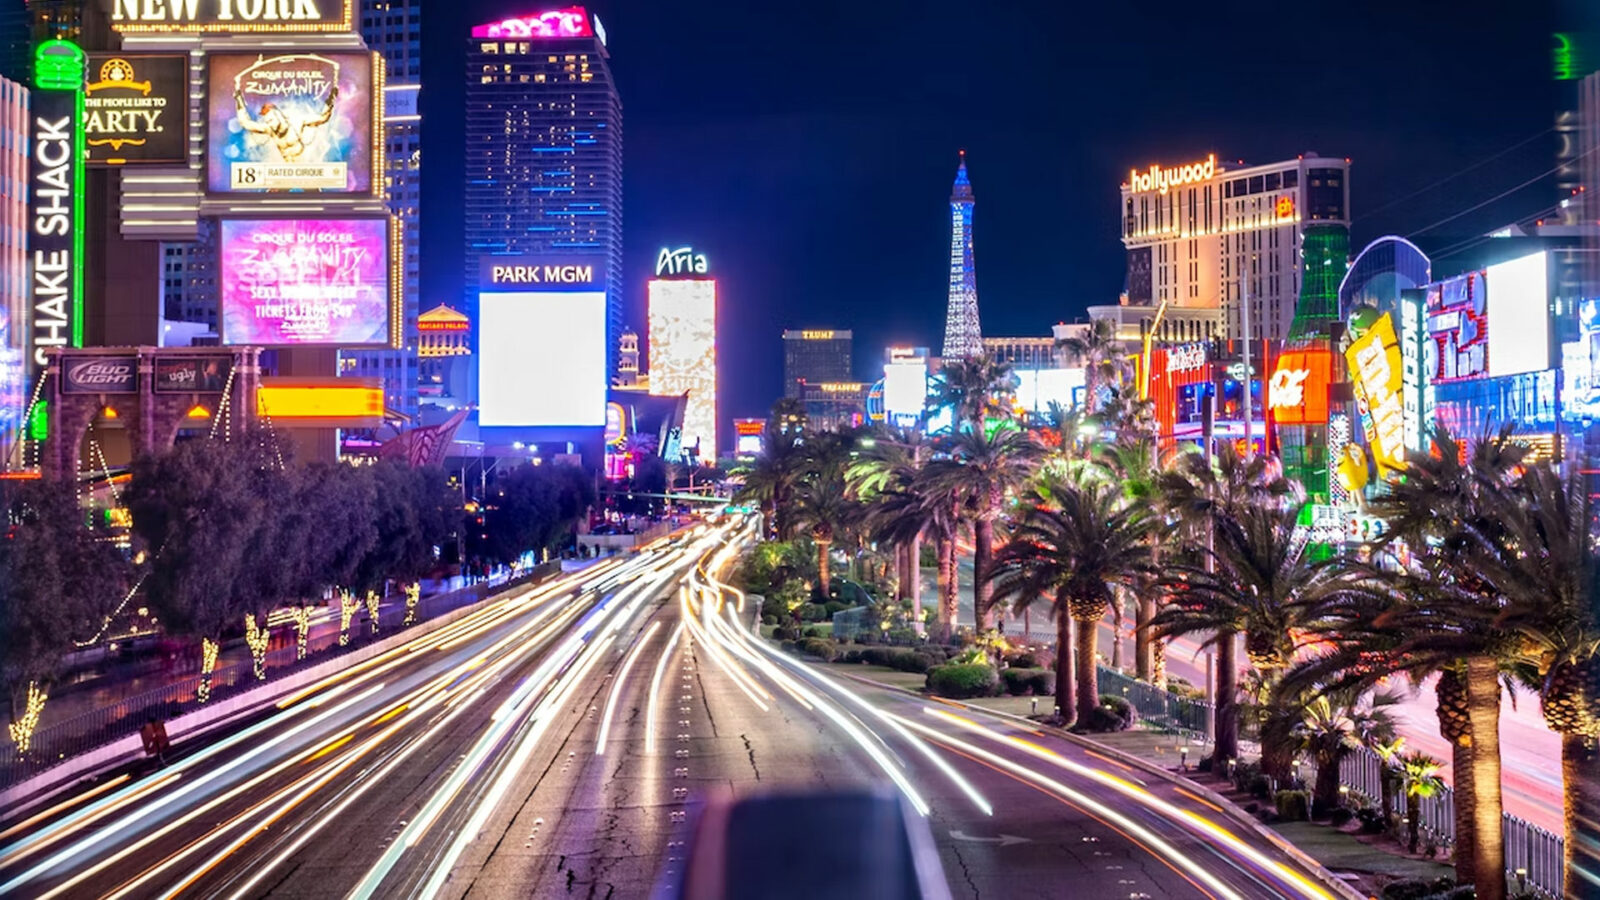 Las Vegas op je iPhone Apple App Store opeens vol